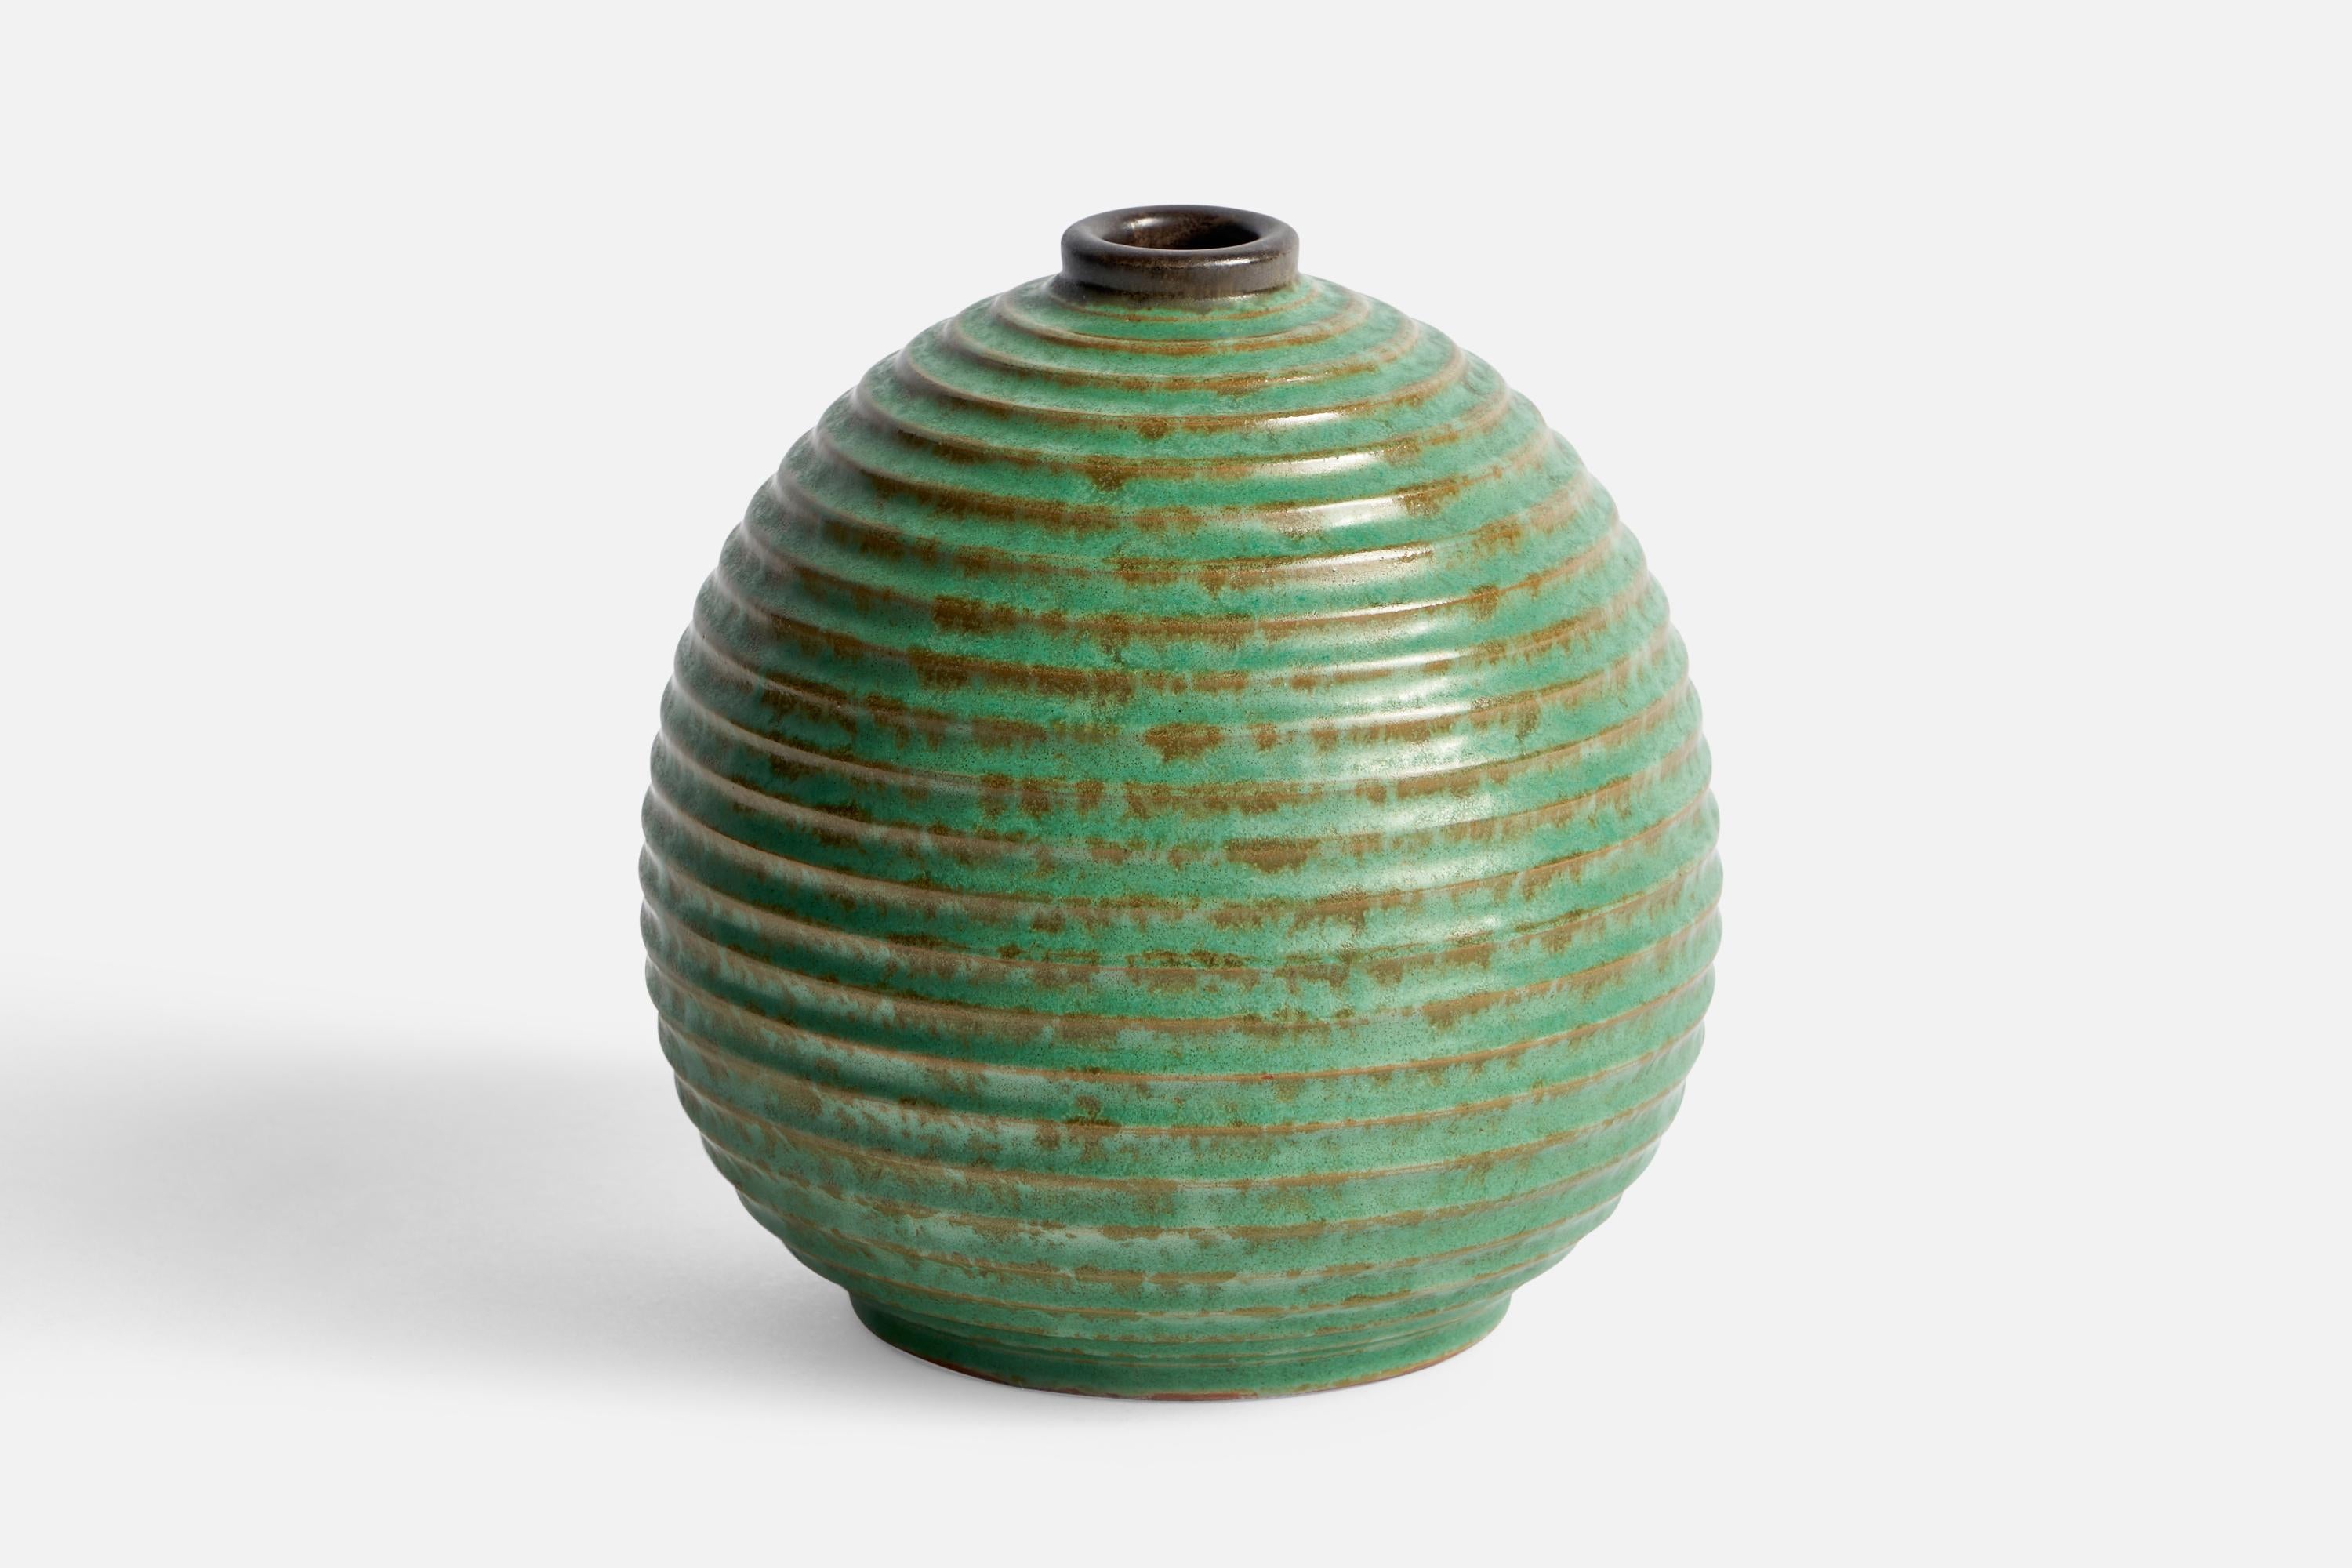 A green-glazed ceramic vase designed by Christer Heijl and produced by Töreboda Keramik, Sweden, 1930s.